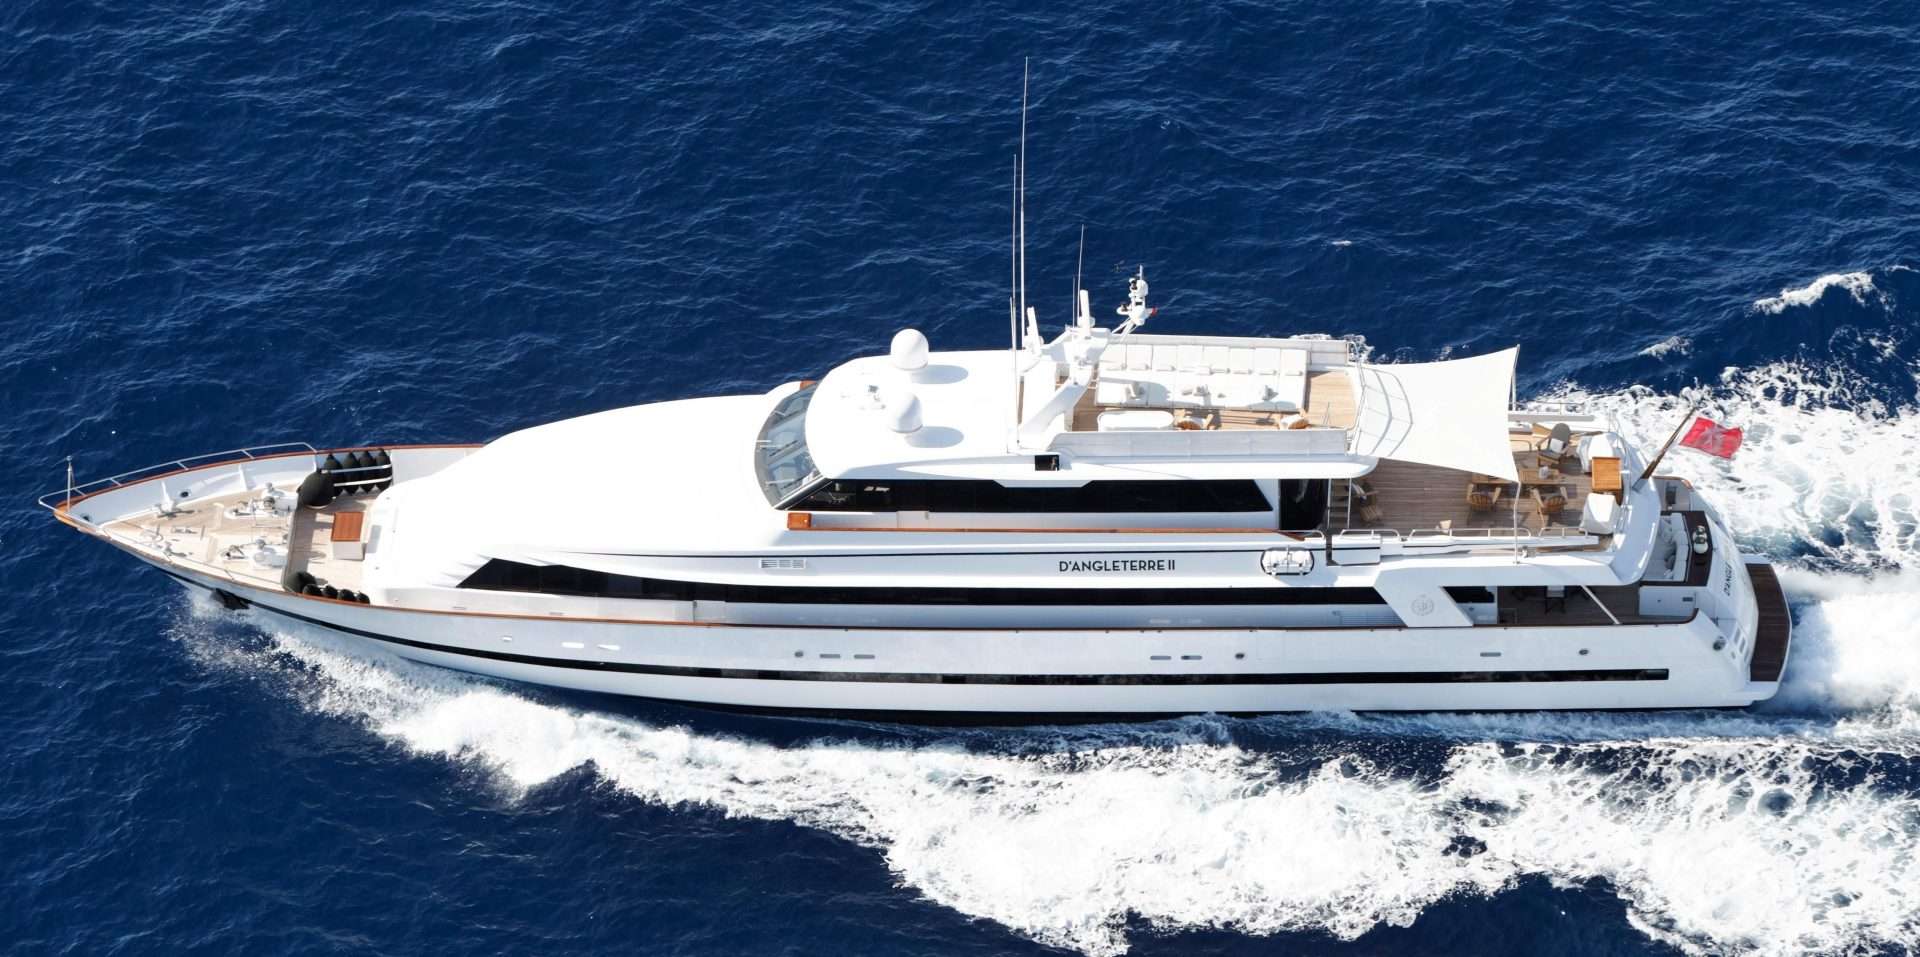 SEA LADY II - Luxury yacht charter Montenegro & Boat hire in W. Med -Naples/Sicily, W. Med -Riviera/Cors/Sard., W. Med - Spain/Balearics 1